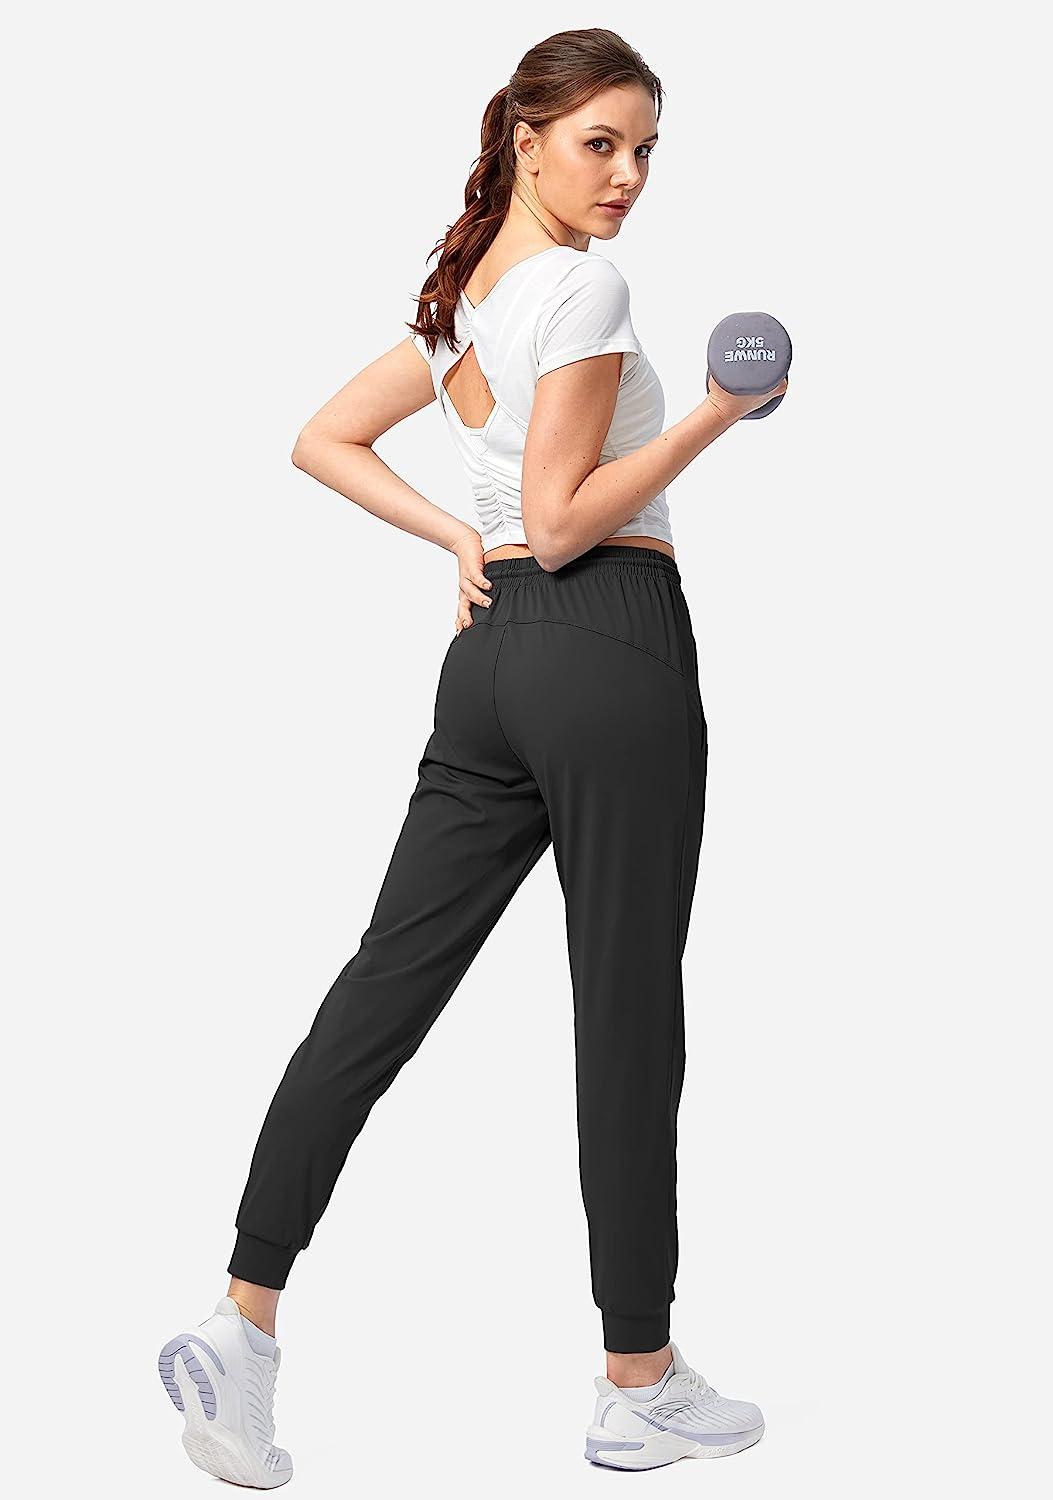 G Gradual Women's Joggers Pants with Zipper Pockets Tapered Running  Sweatpants for Women Lounge, Jogging Black Medium